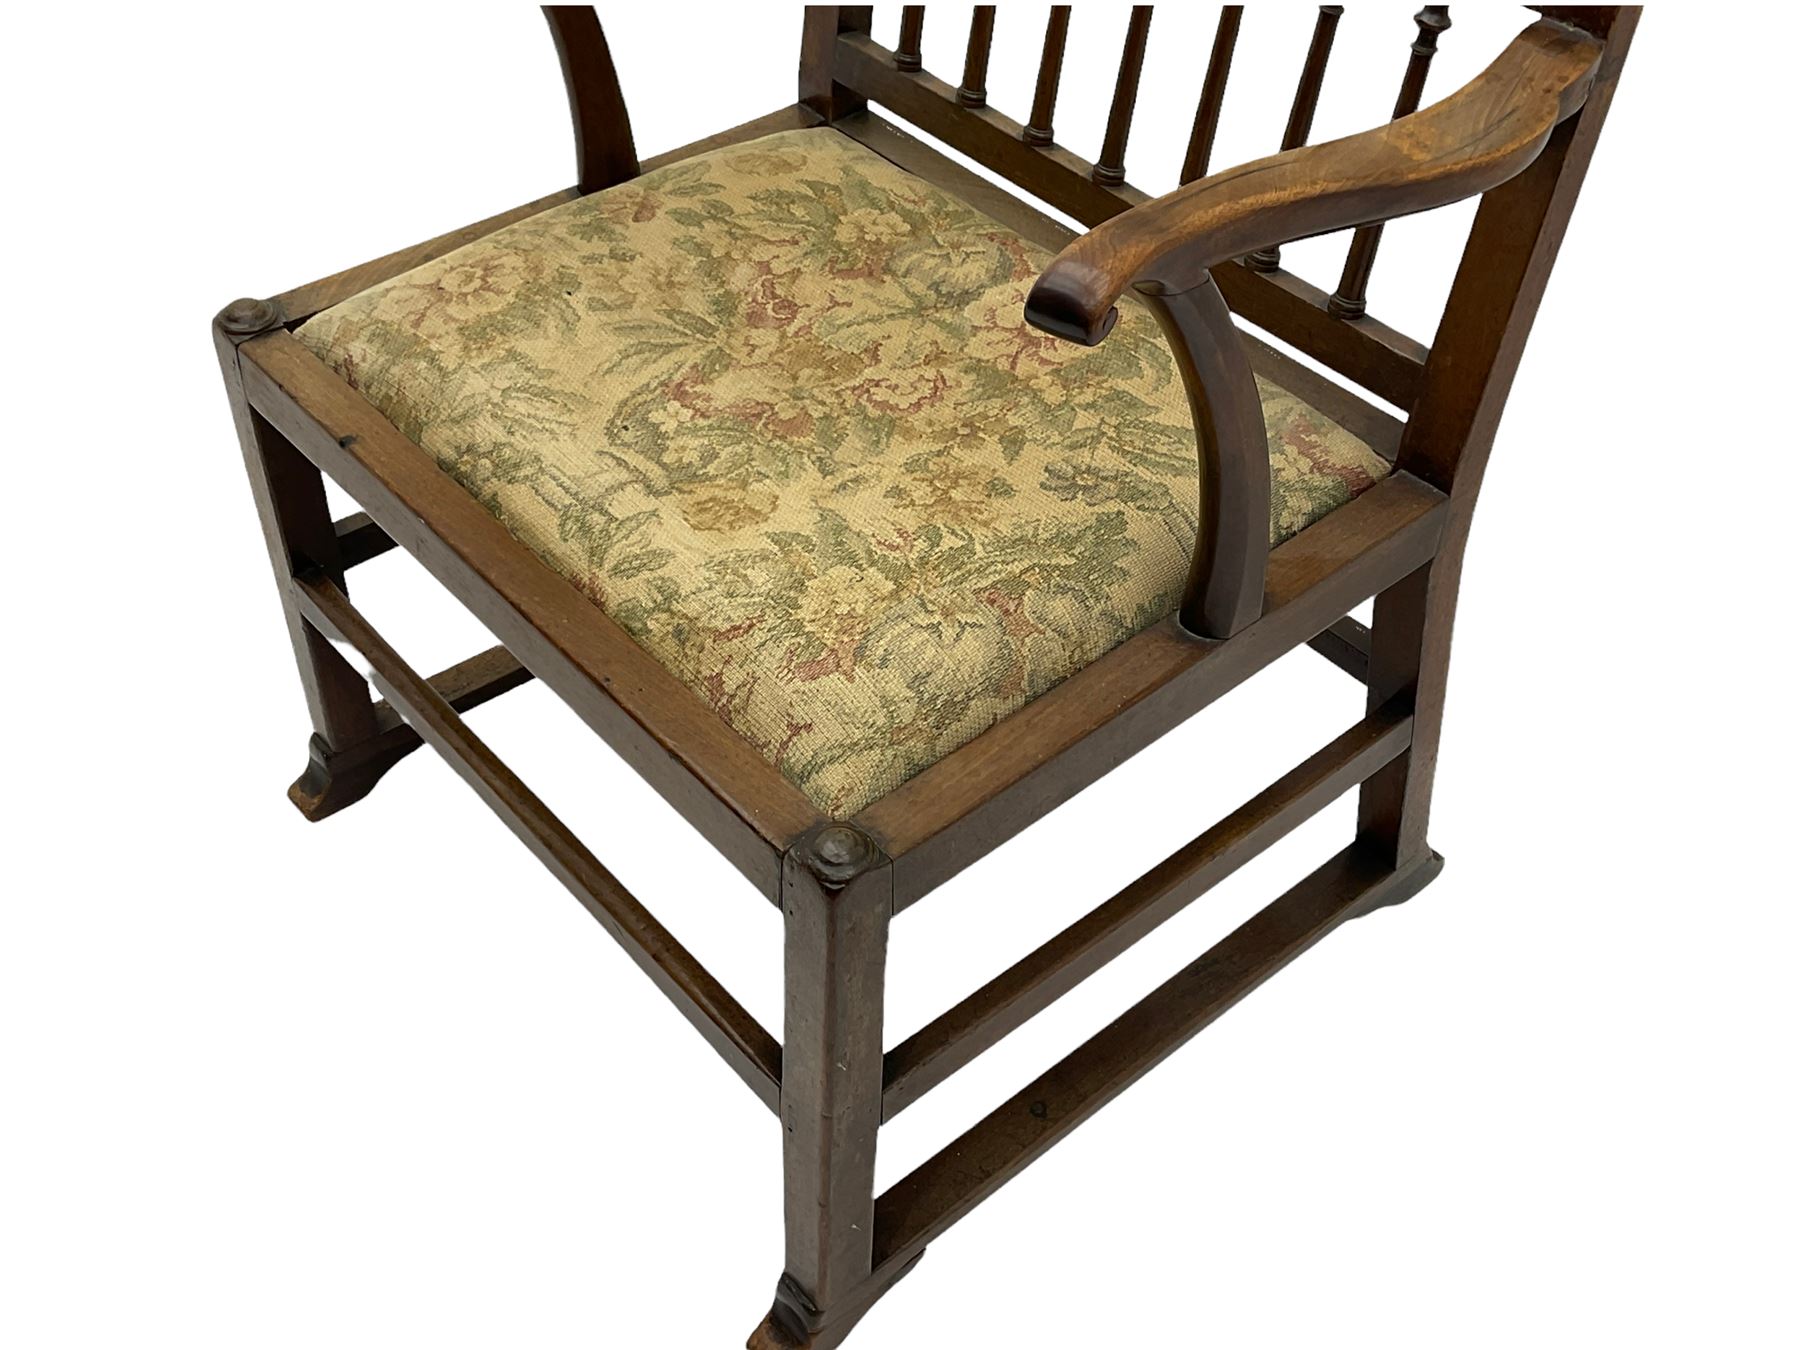 Late 18th century walnut 'Drunkard's' chair - Image 3 of 5